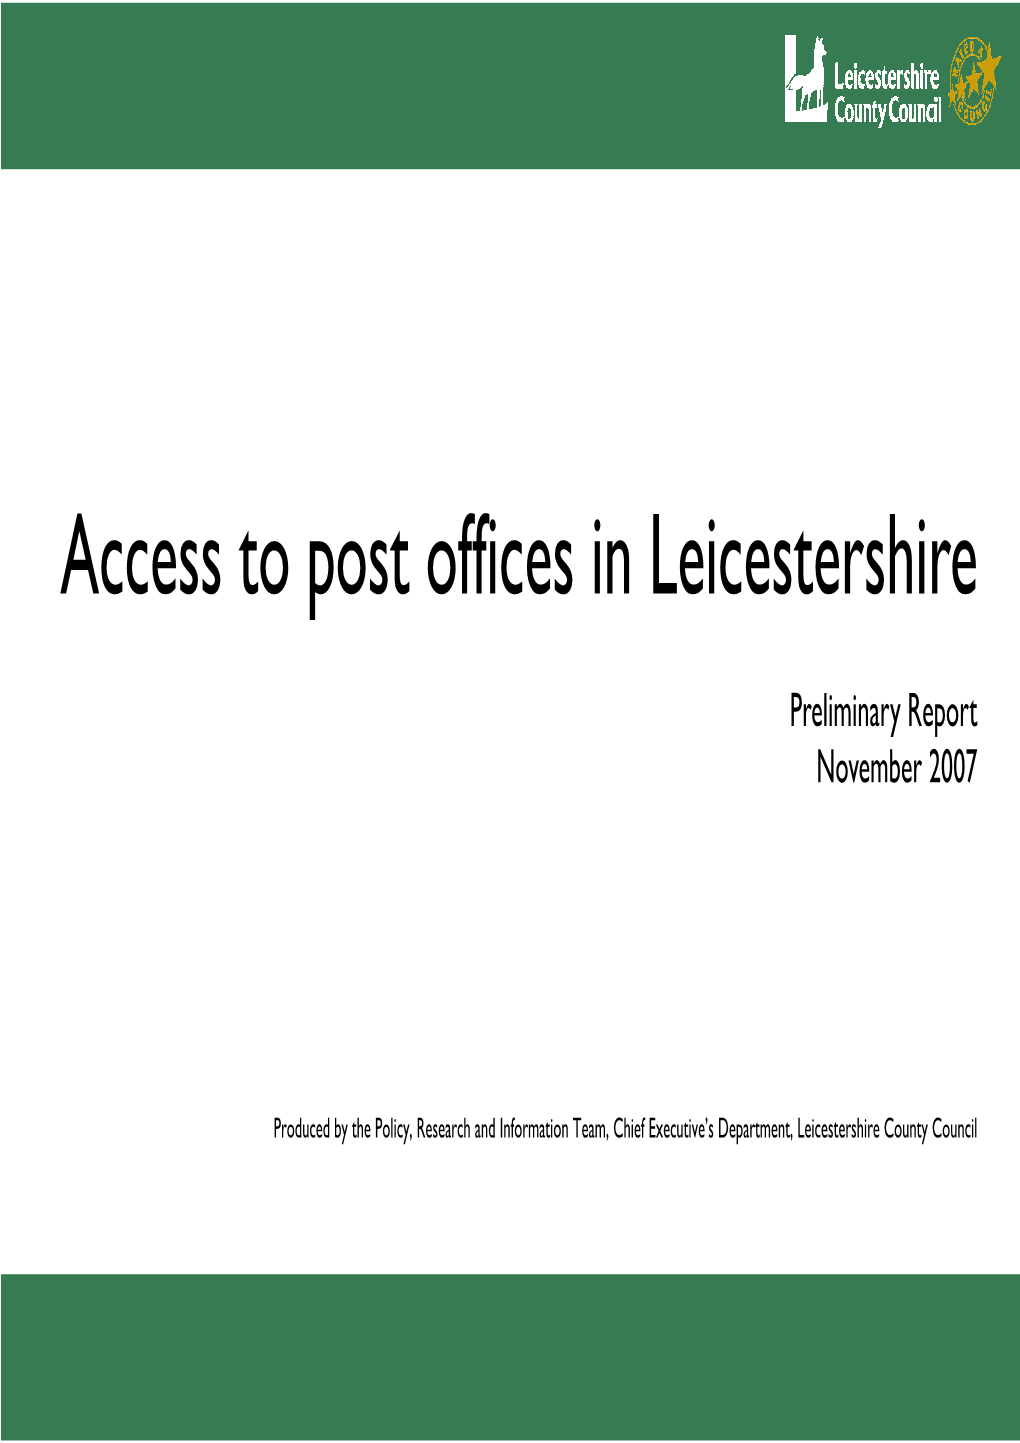 Access to Postal Services211107.Pub